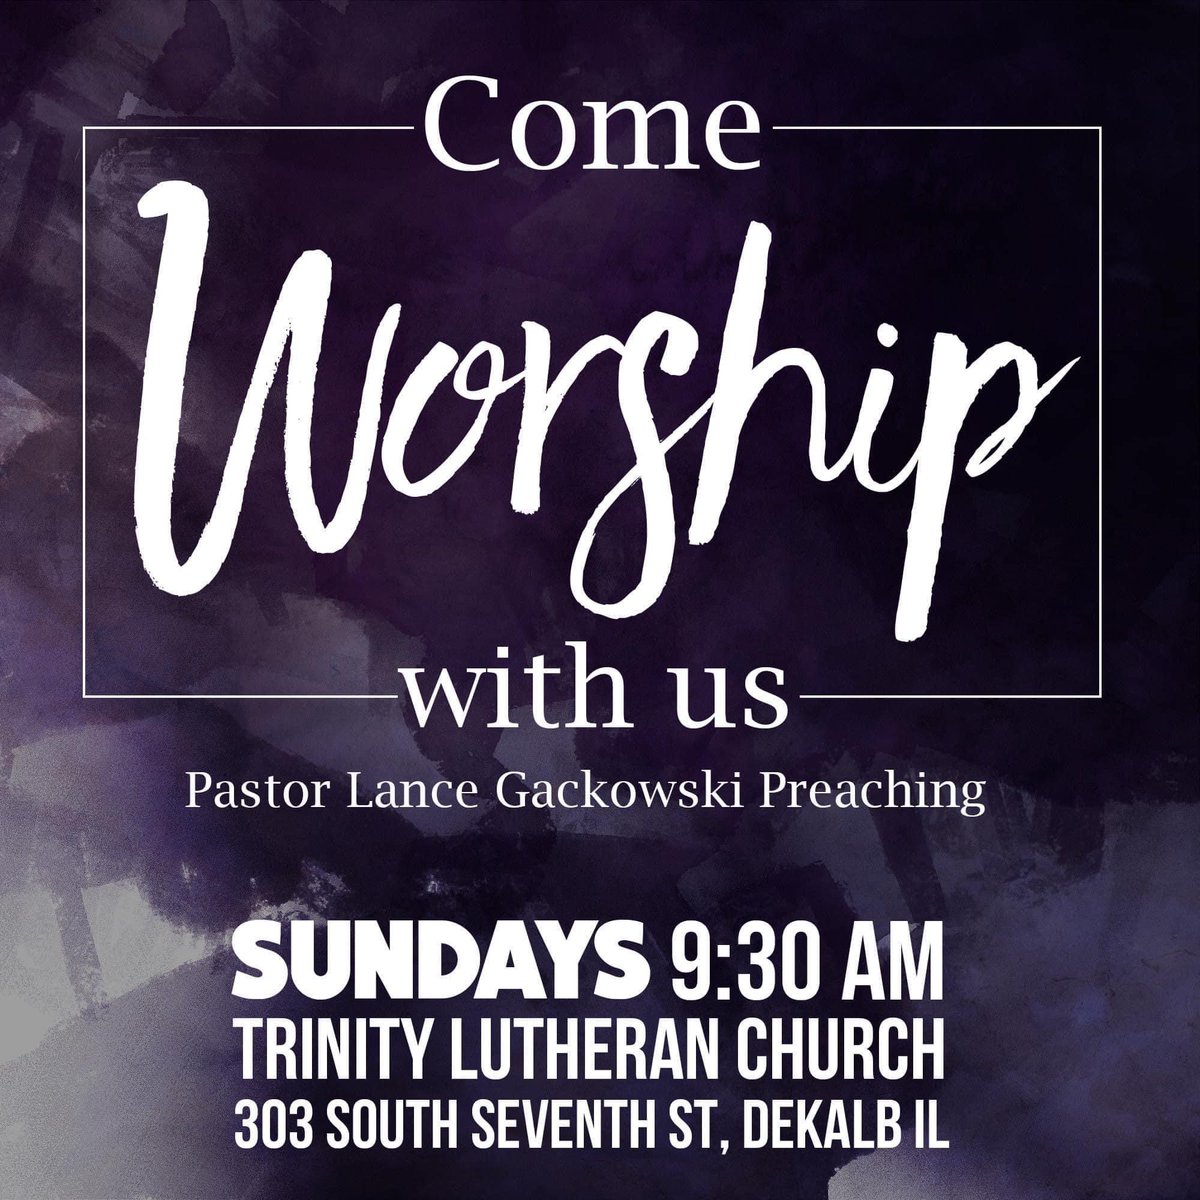 Join us tomorrow for worship 

#dekalb #dekalbillinois #dekalbil #sycamore #sycamoreillinois #sycamoreil #church #worship #churchservice